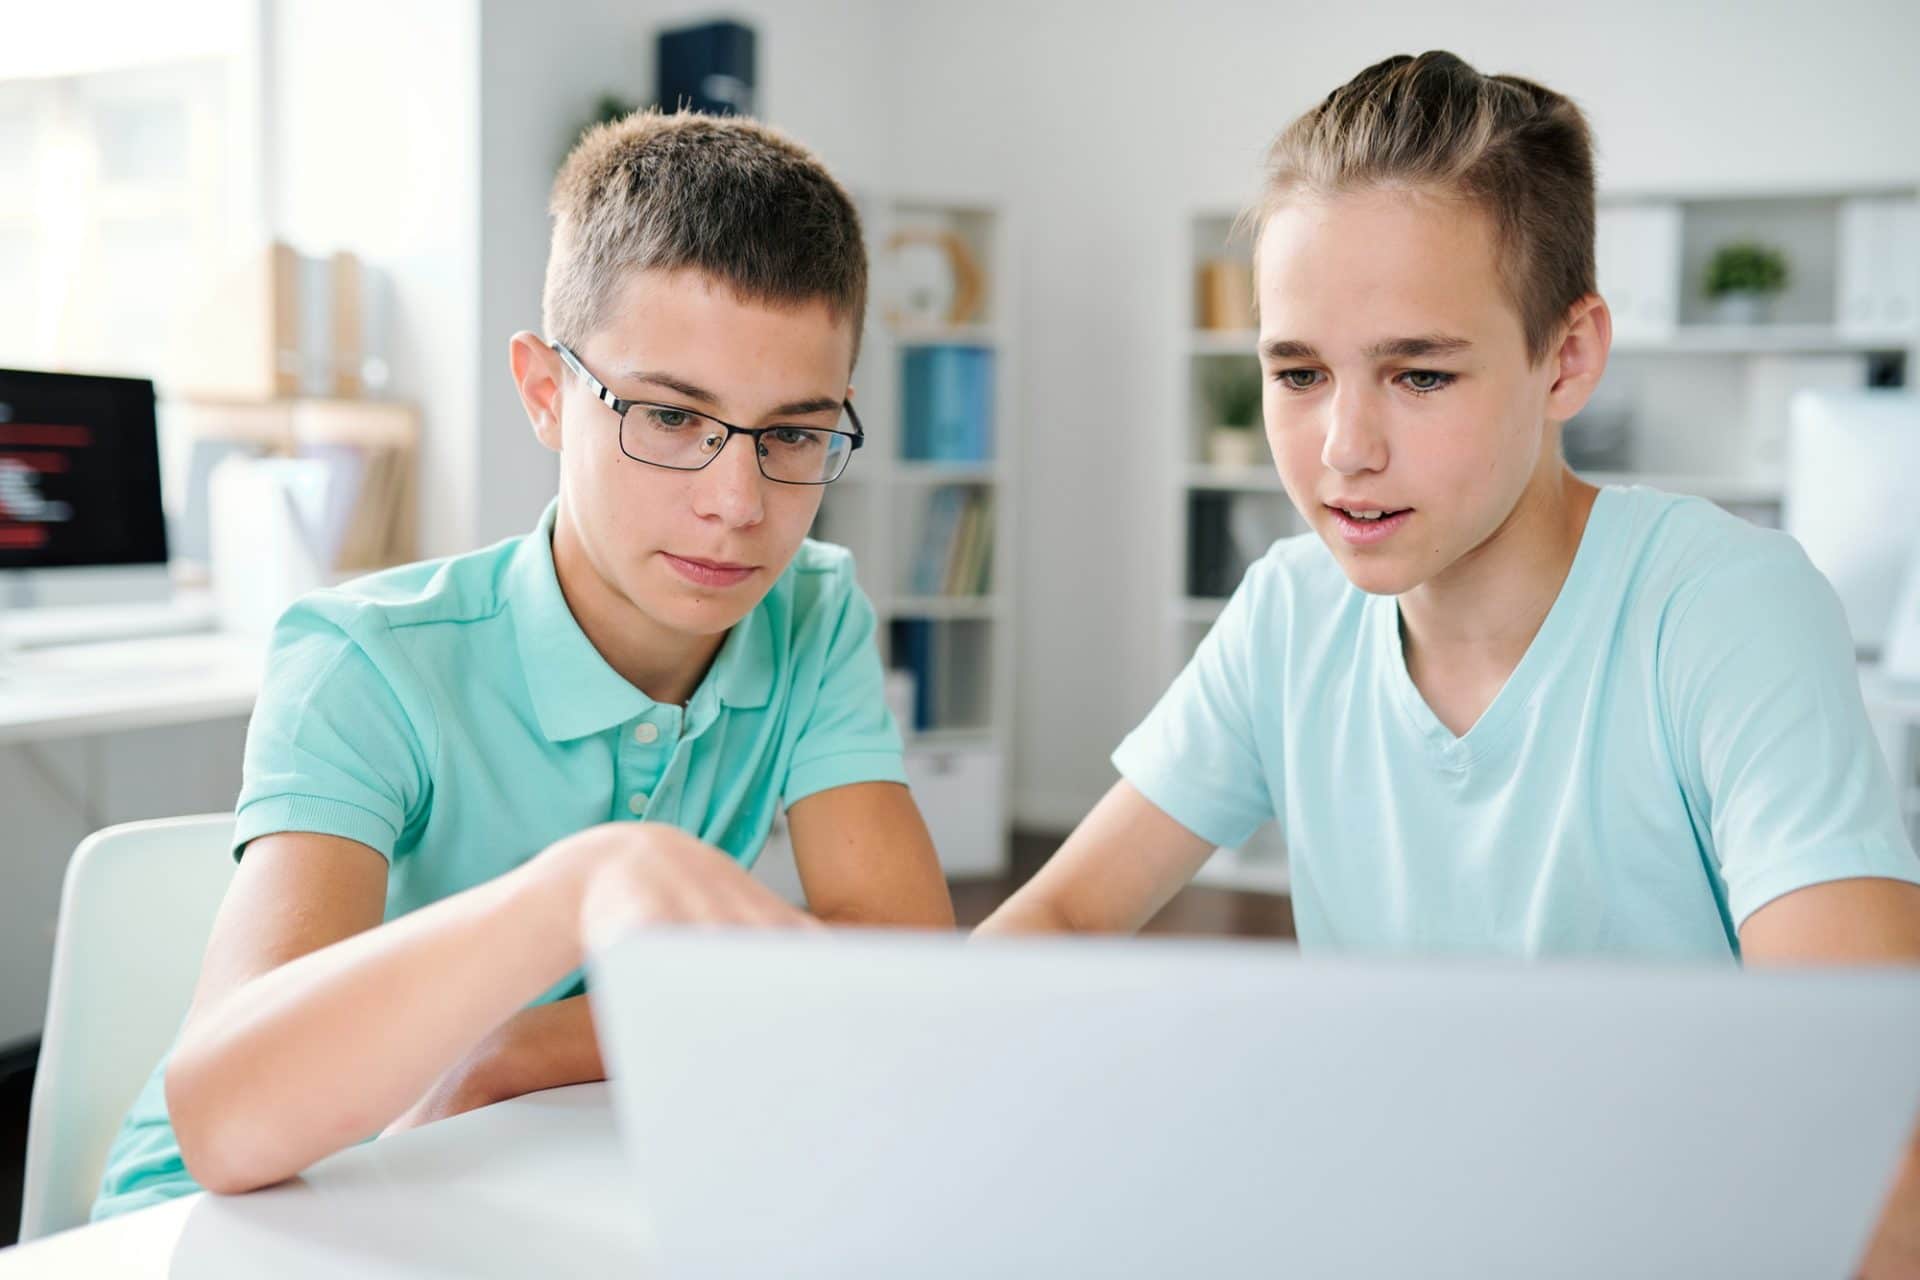 Students learning through online platform